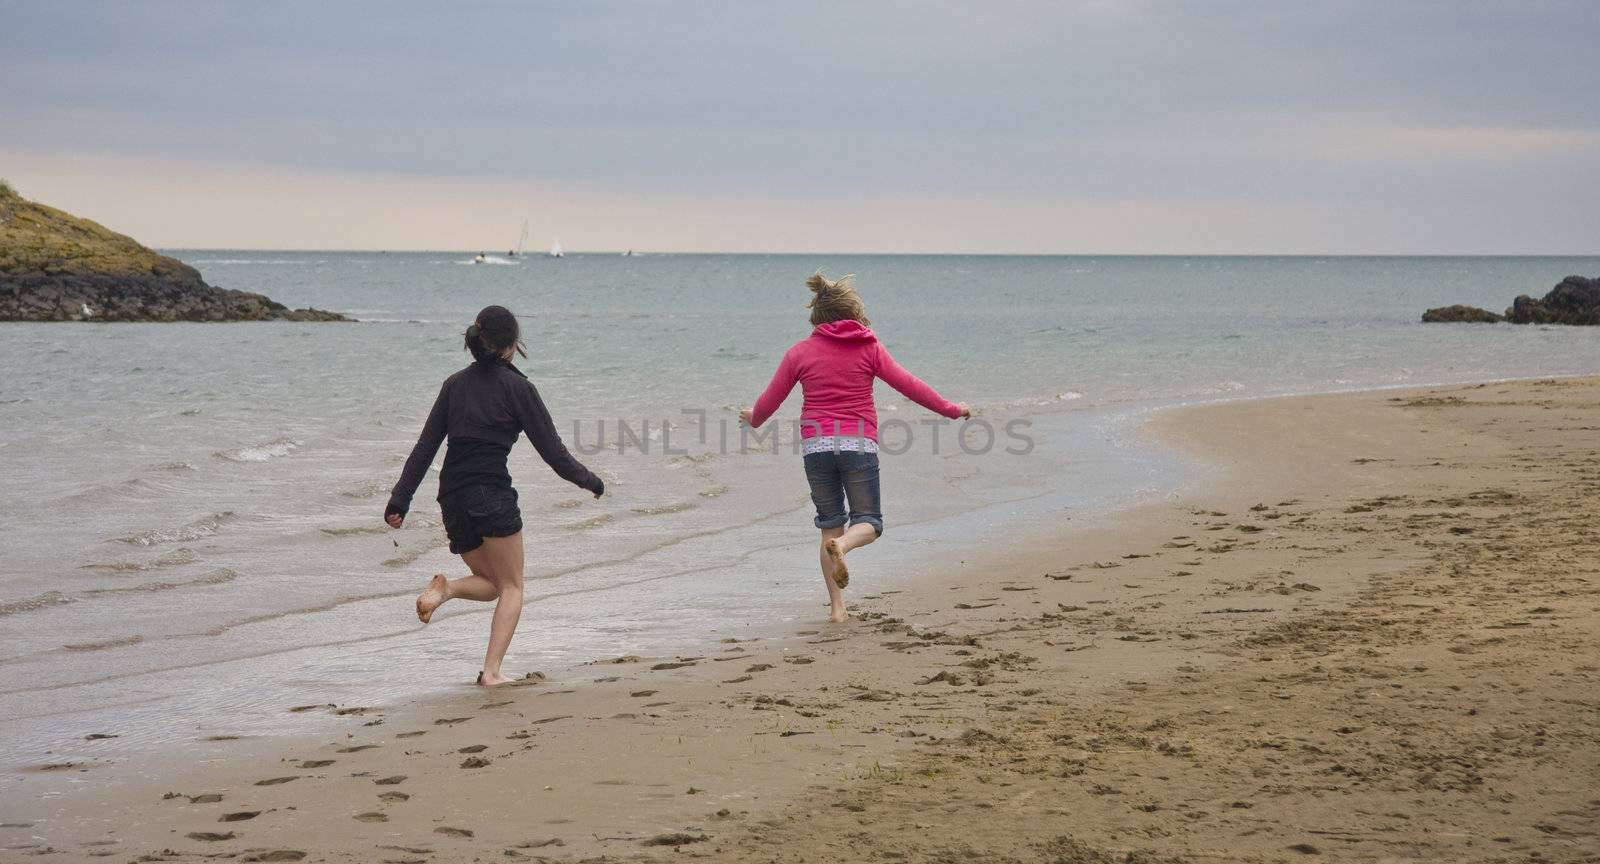 Two teenage girls run along the beach.